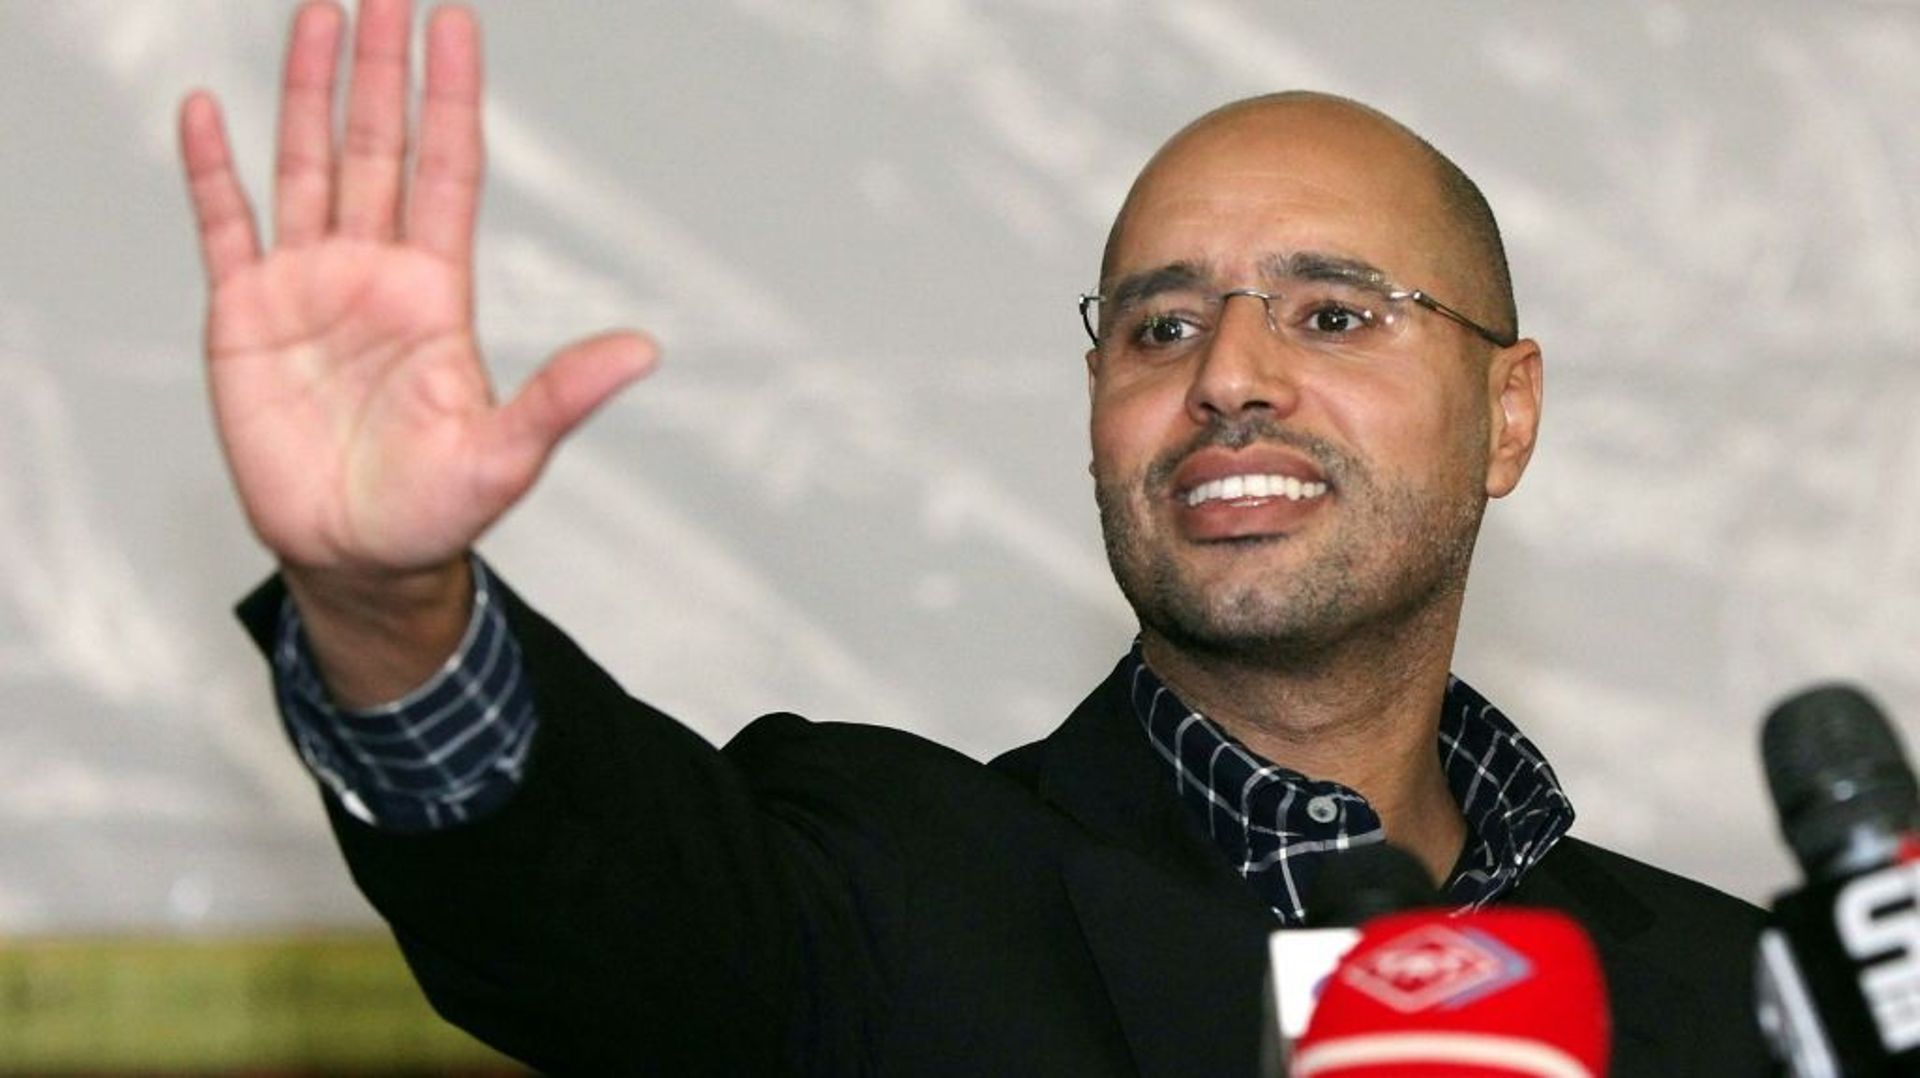 Libye : Seif al-Islam Kadhafi, fils de Mouammar Kadhafi, candidat à la présidentielle